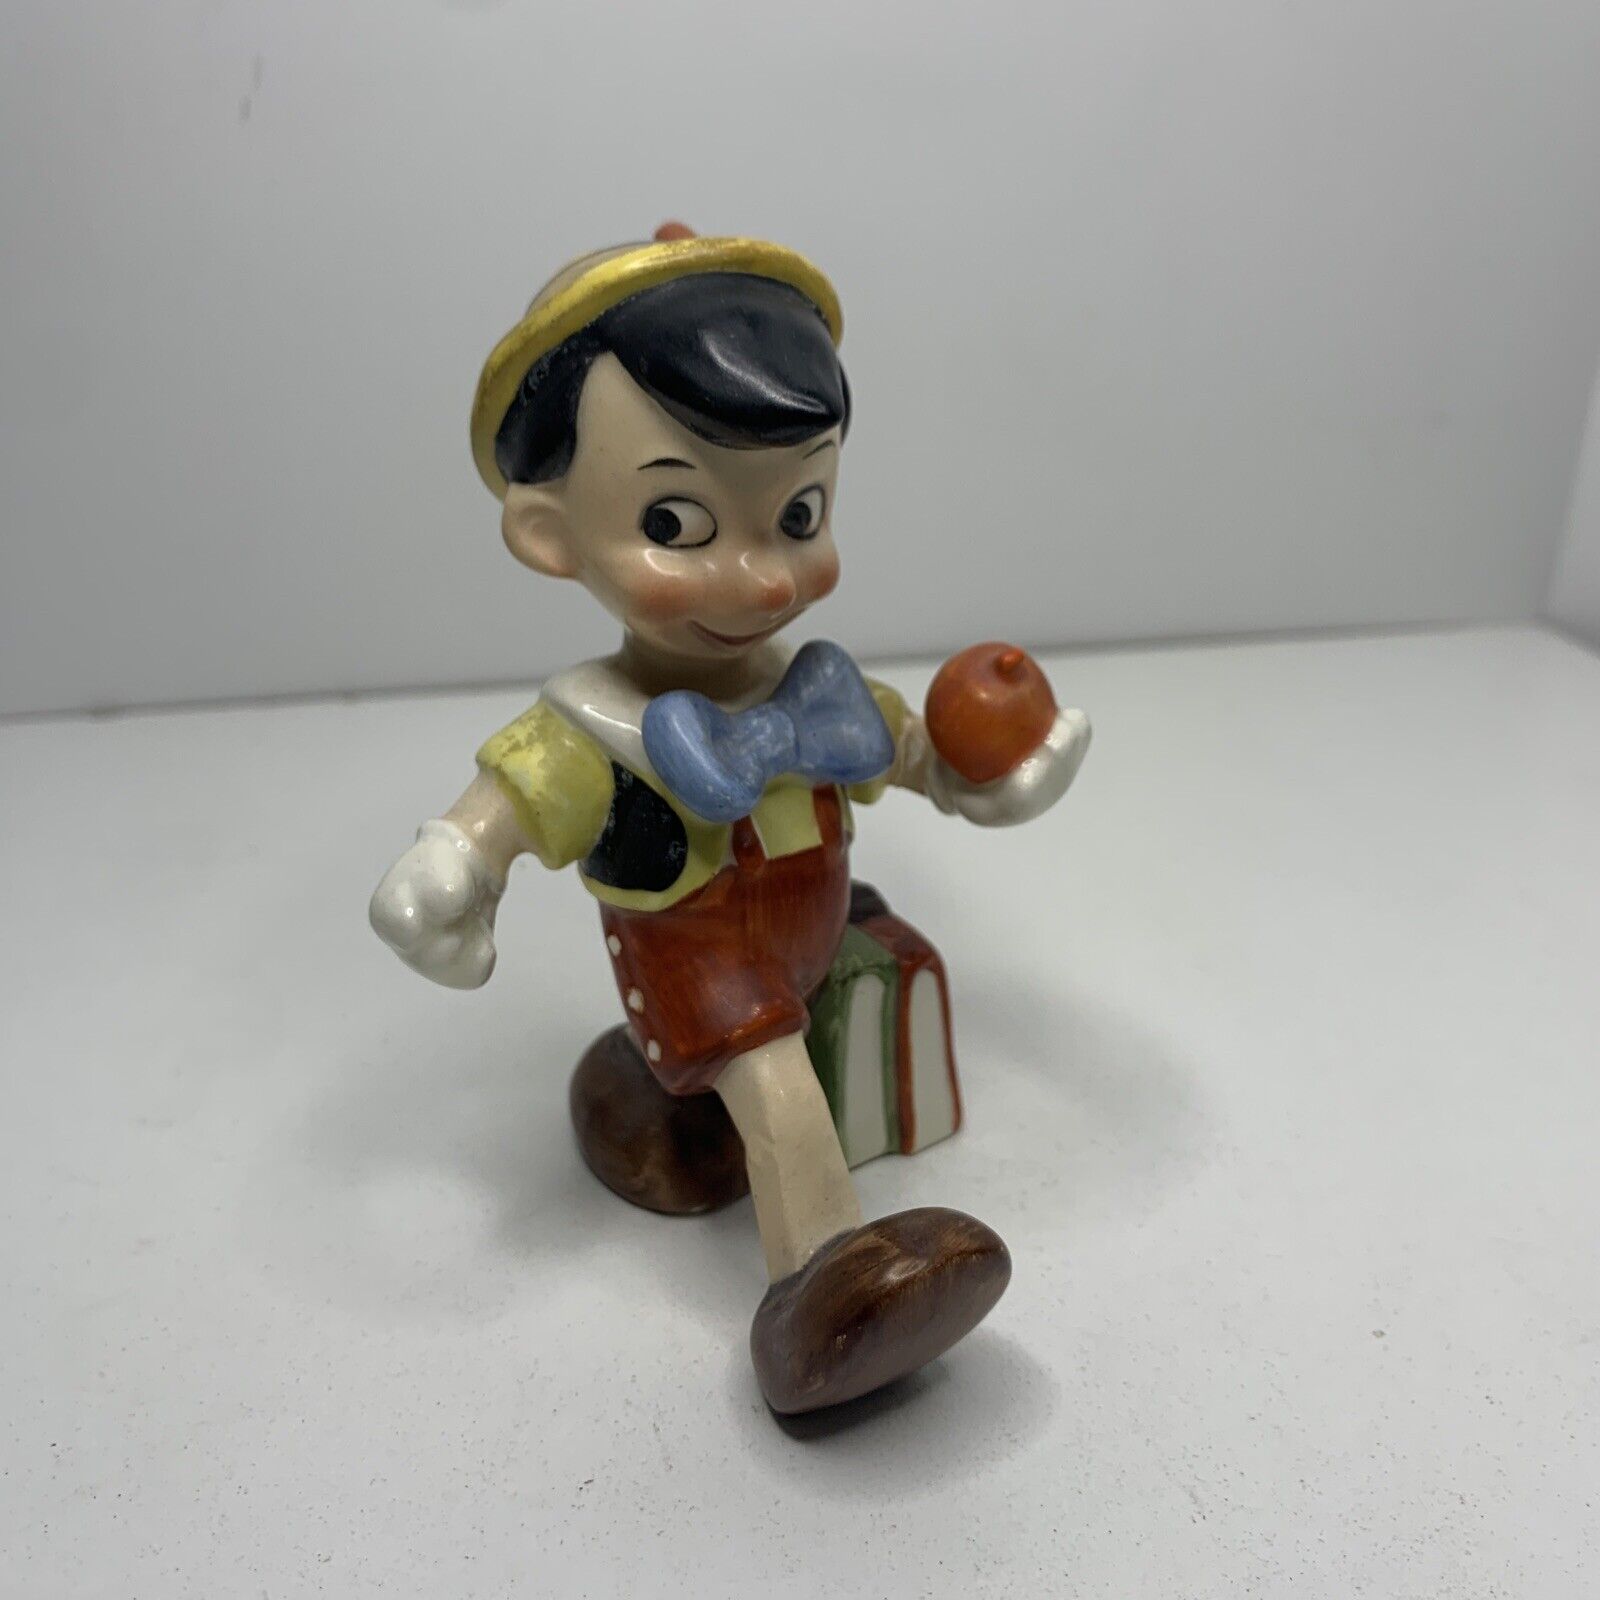 Vintage Disney 1950s Goebel Pinocchio Walking with Apple Figurine Germany - RARE